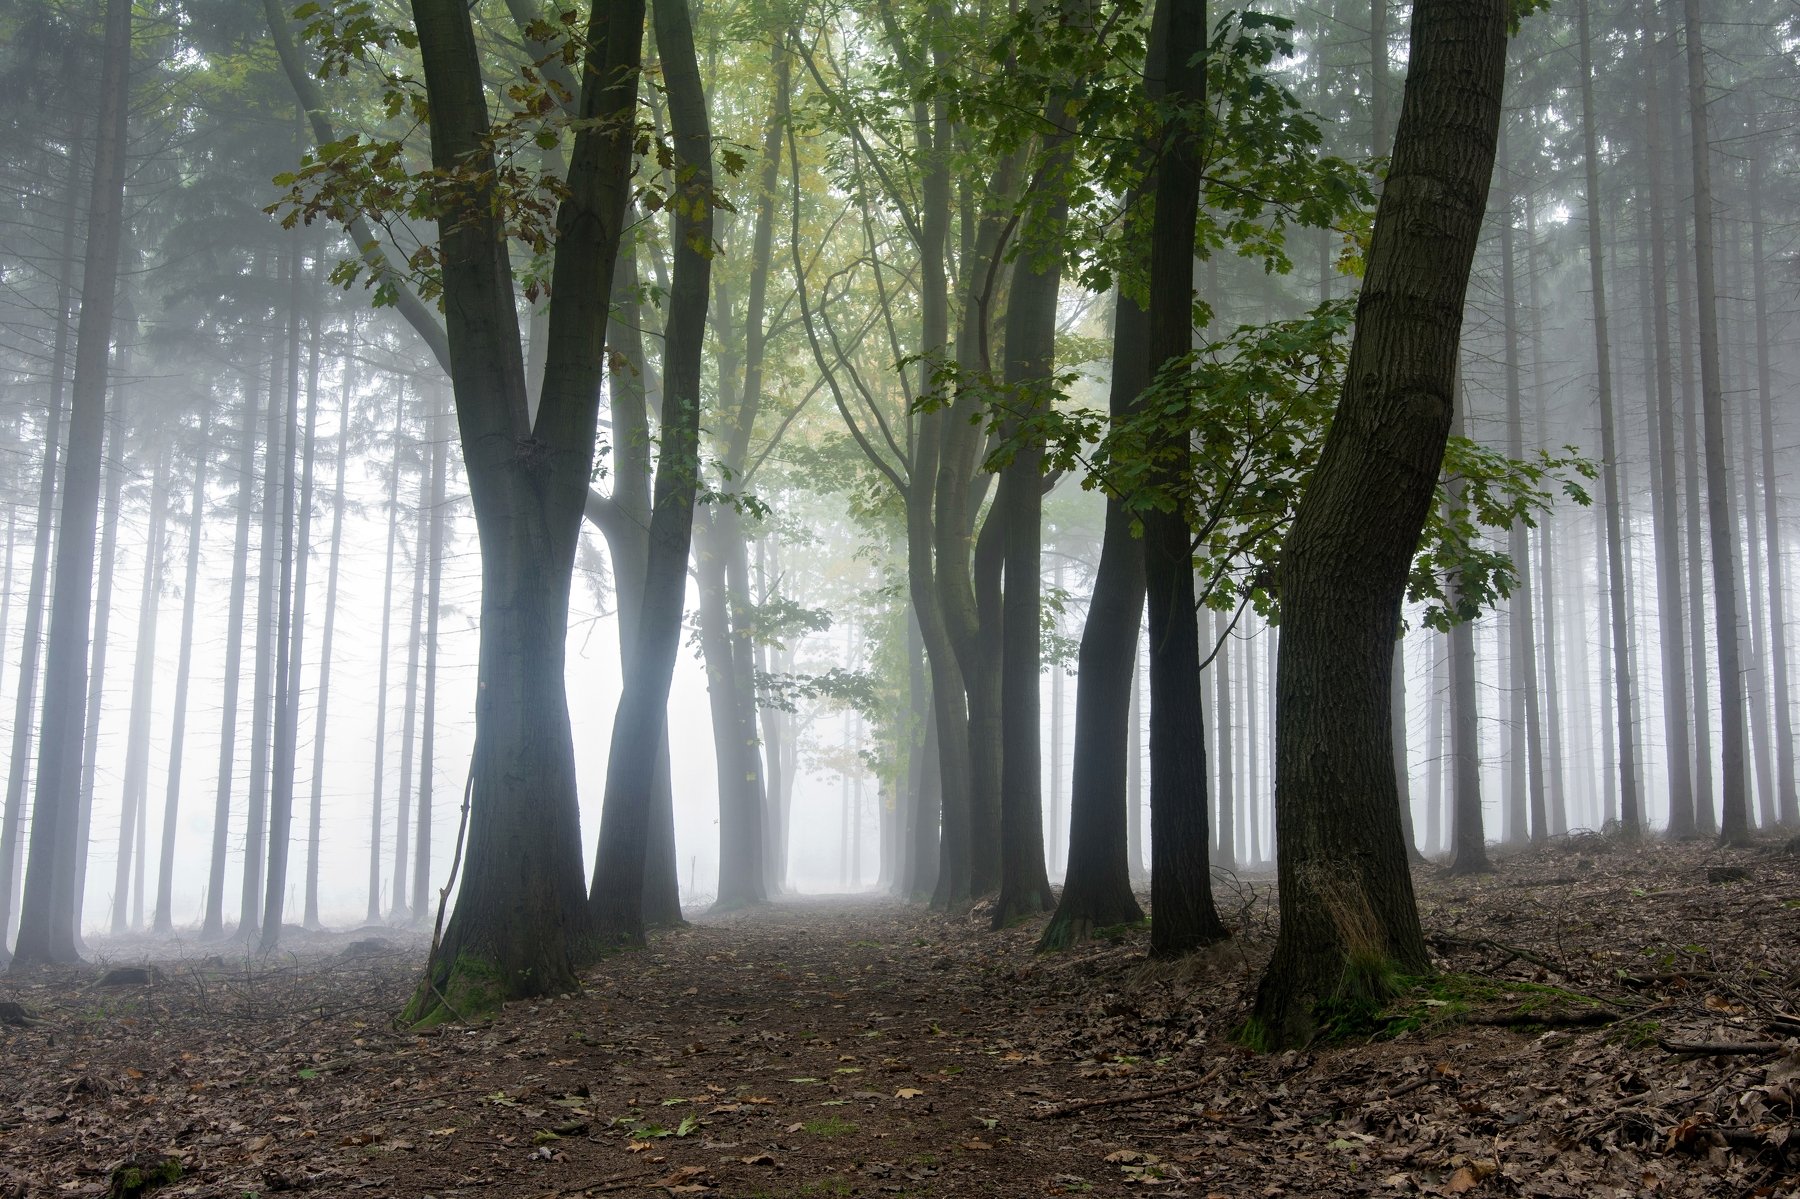 fog,mist,autumn,fall,morning,foggy,misty,nobody,forest,trees,way,road,nature,mysterious,fantasy,, David Charouz